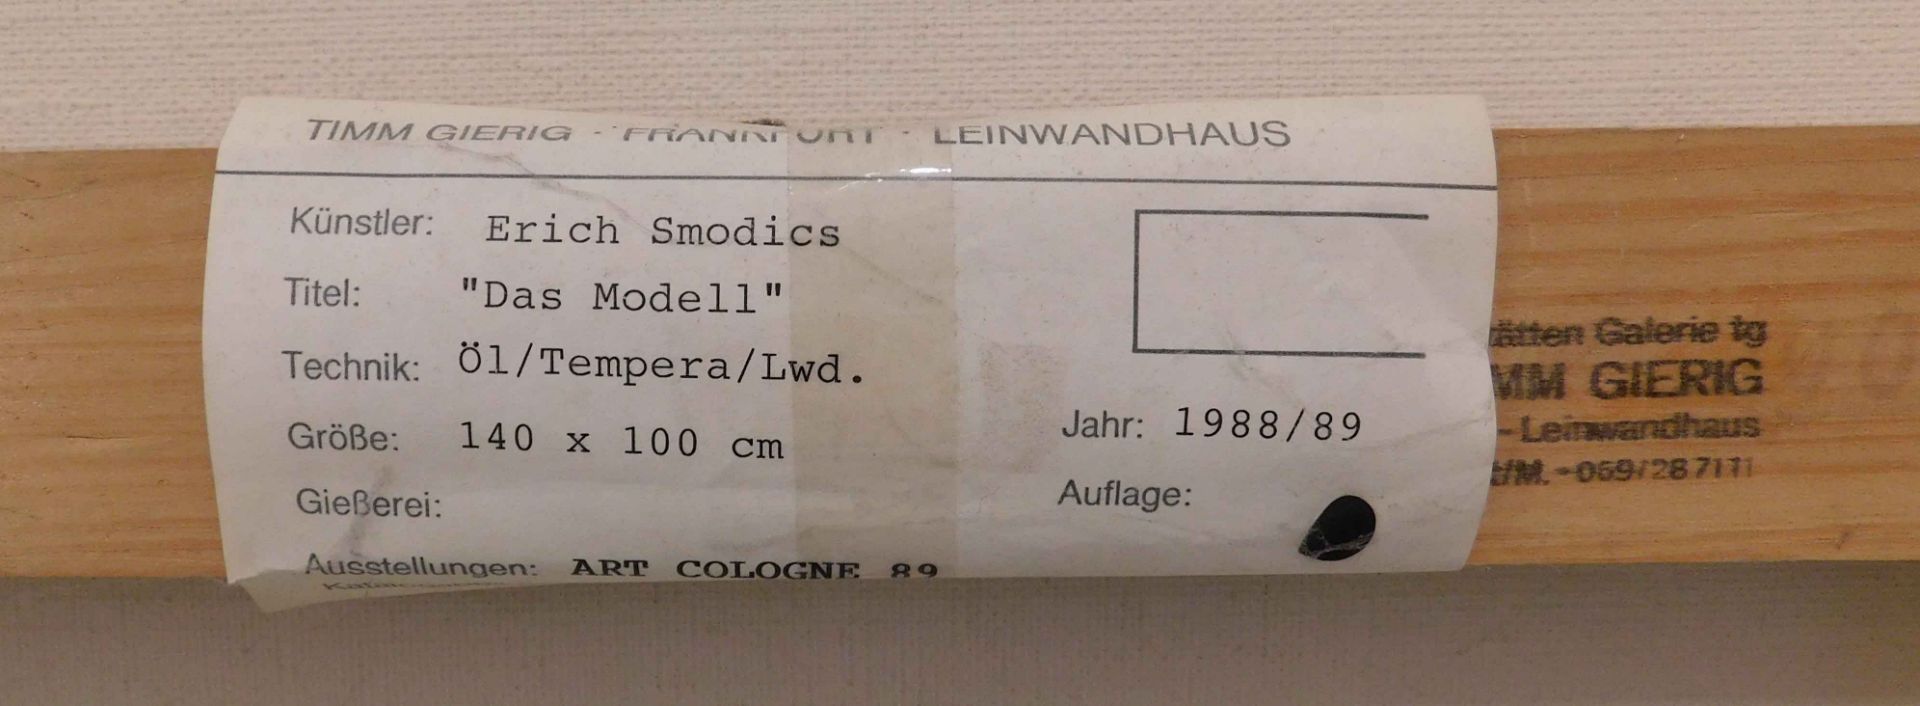 Erich SMODICS (1941 -). "Das Modell" - Image 12 of 12